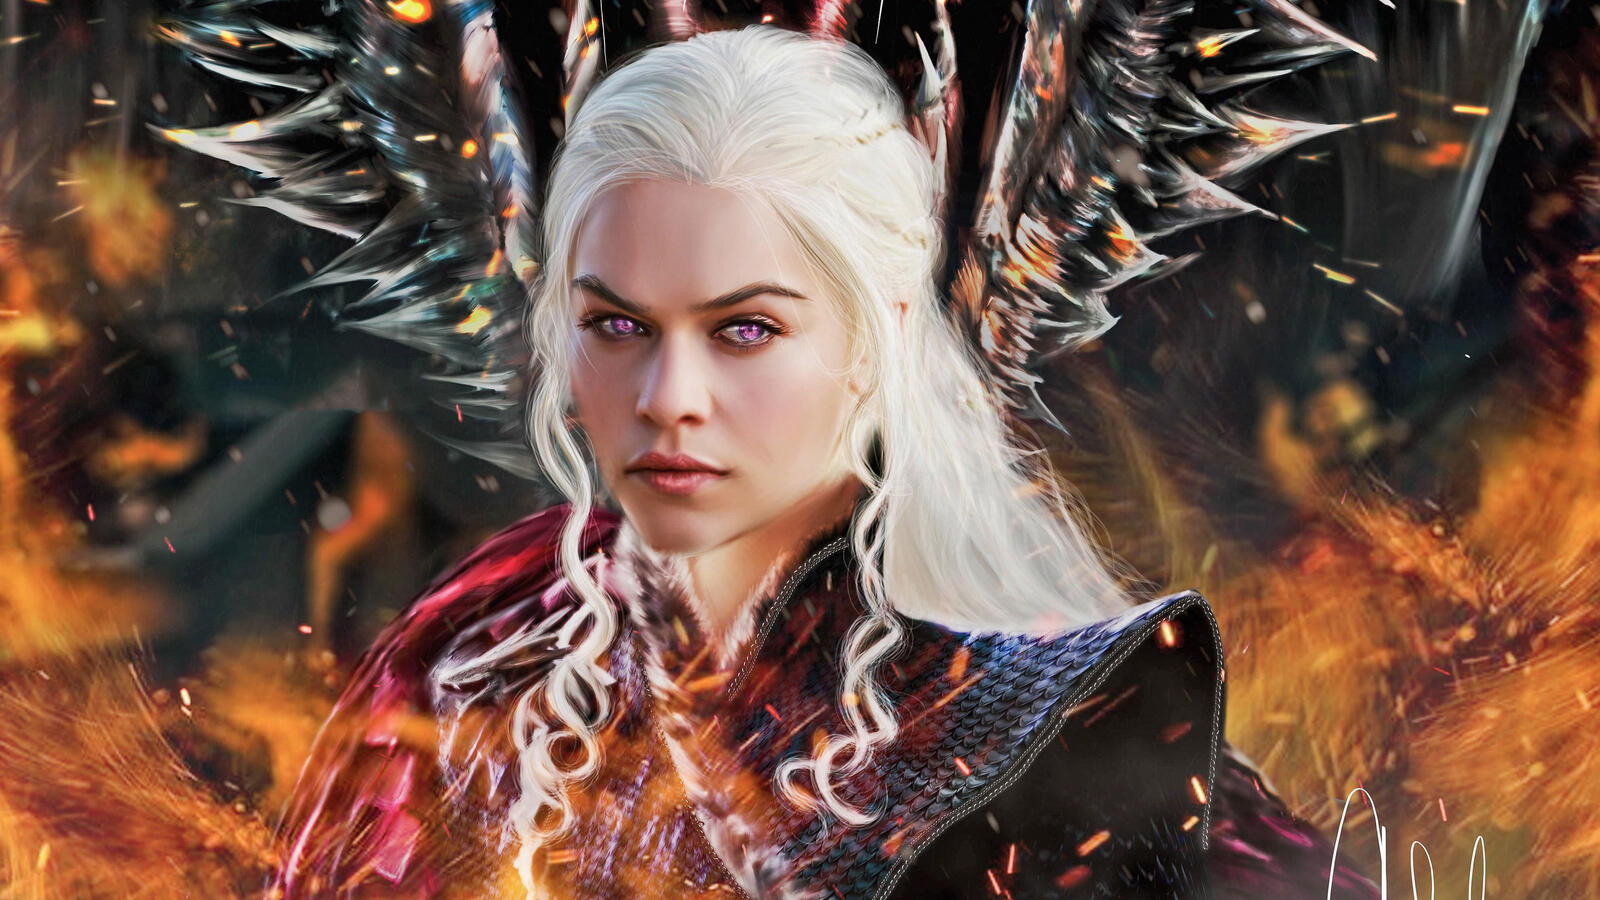 Wallpapers Daenerys Targaryen Game Of Thrones artwork on the desktop